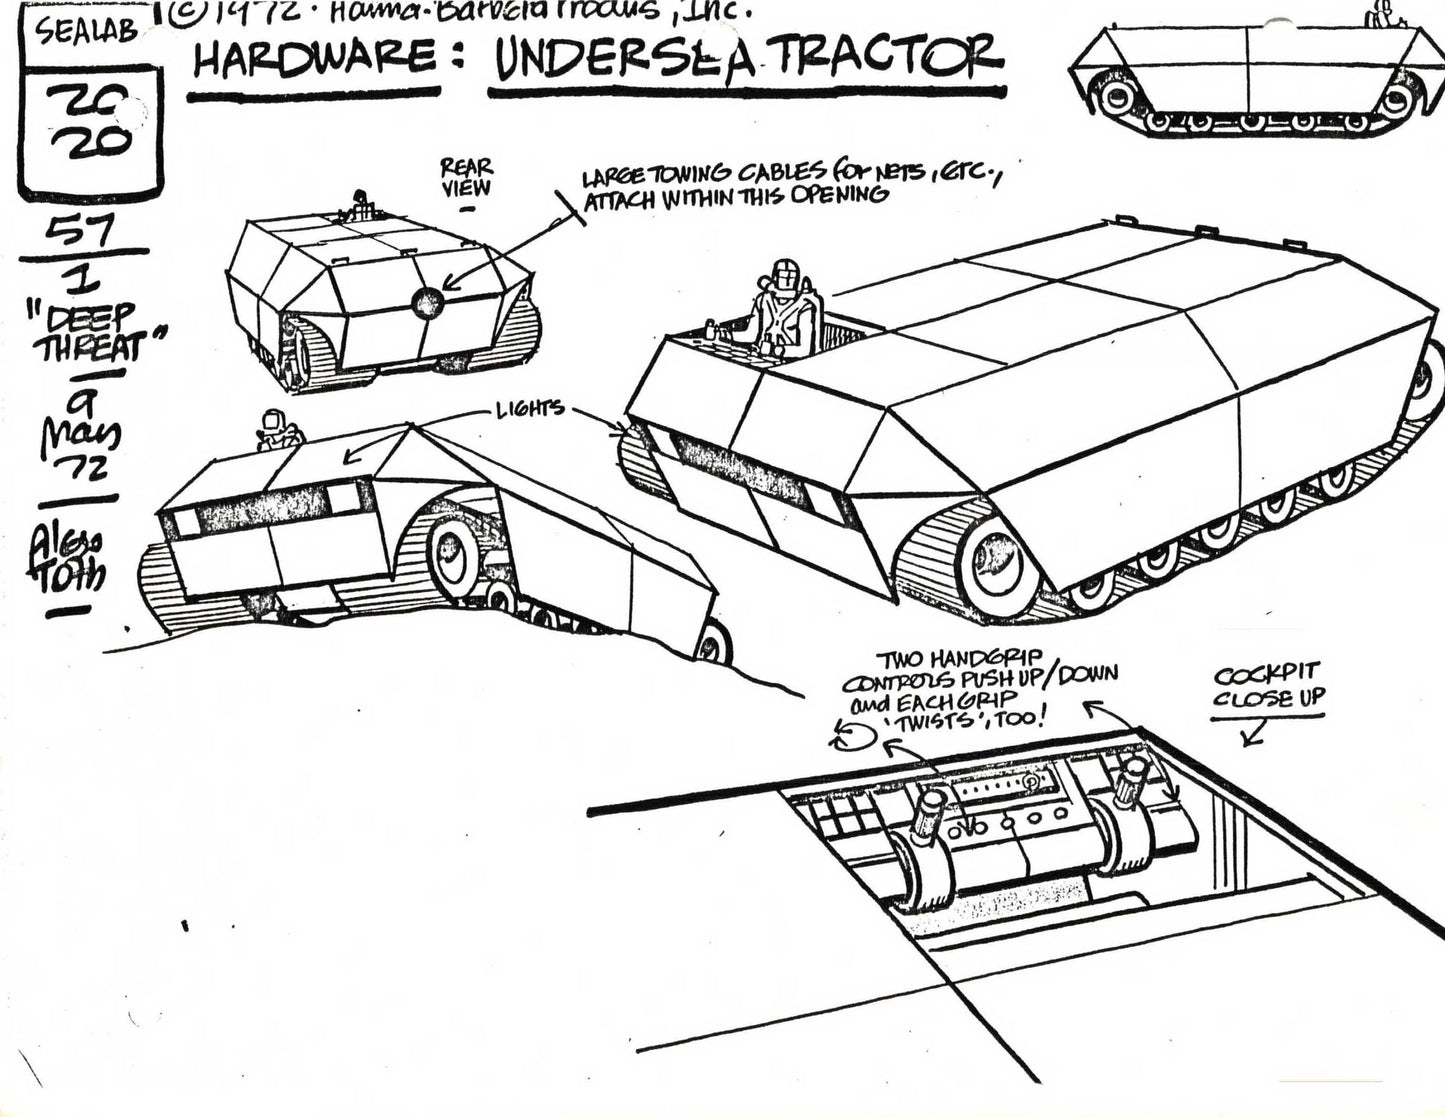 Alex Toth Sealab 2020 1972 Model Sheet Copy from Hanna Barbera Tractor 21